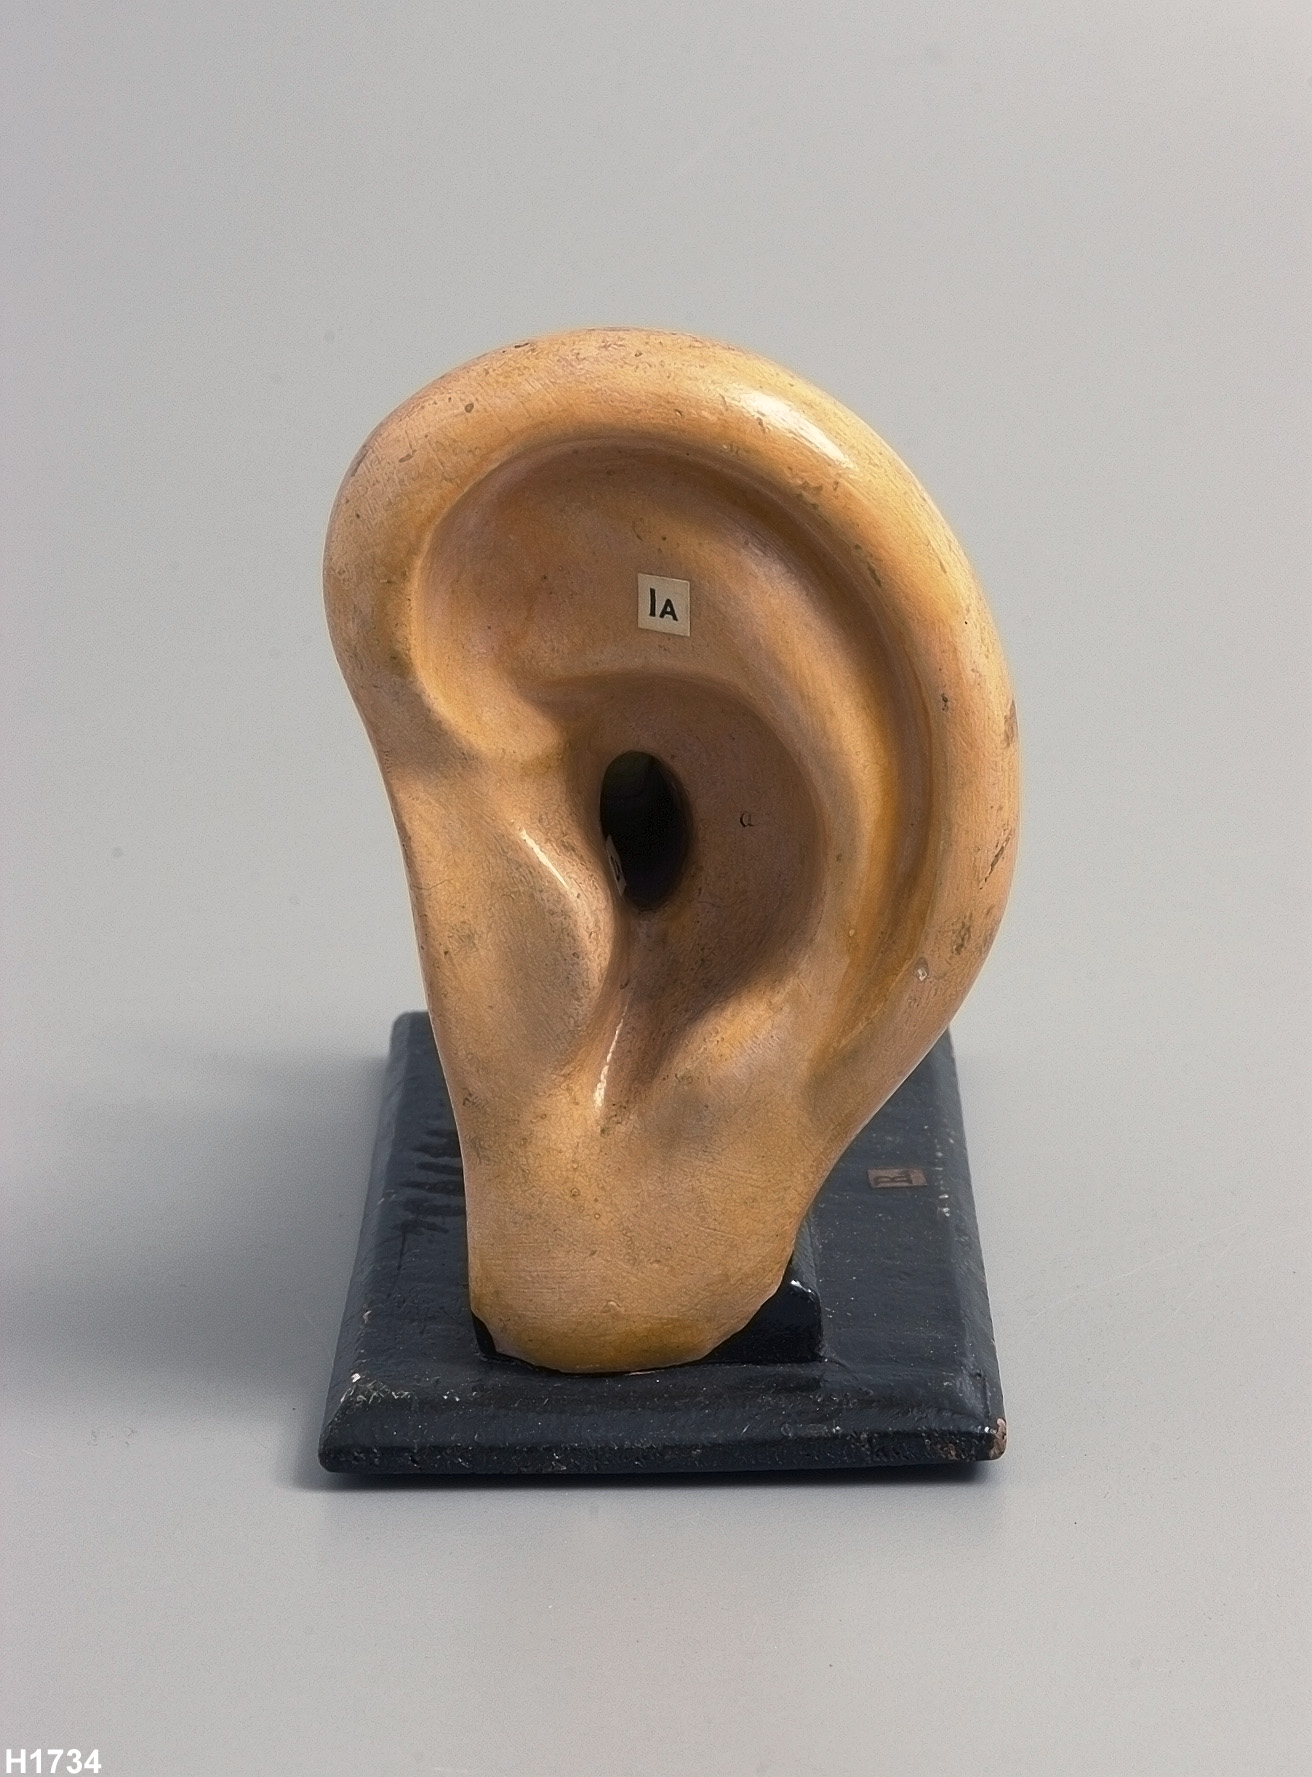 Anatomical model of a human ear